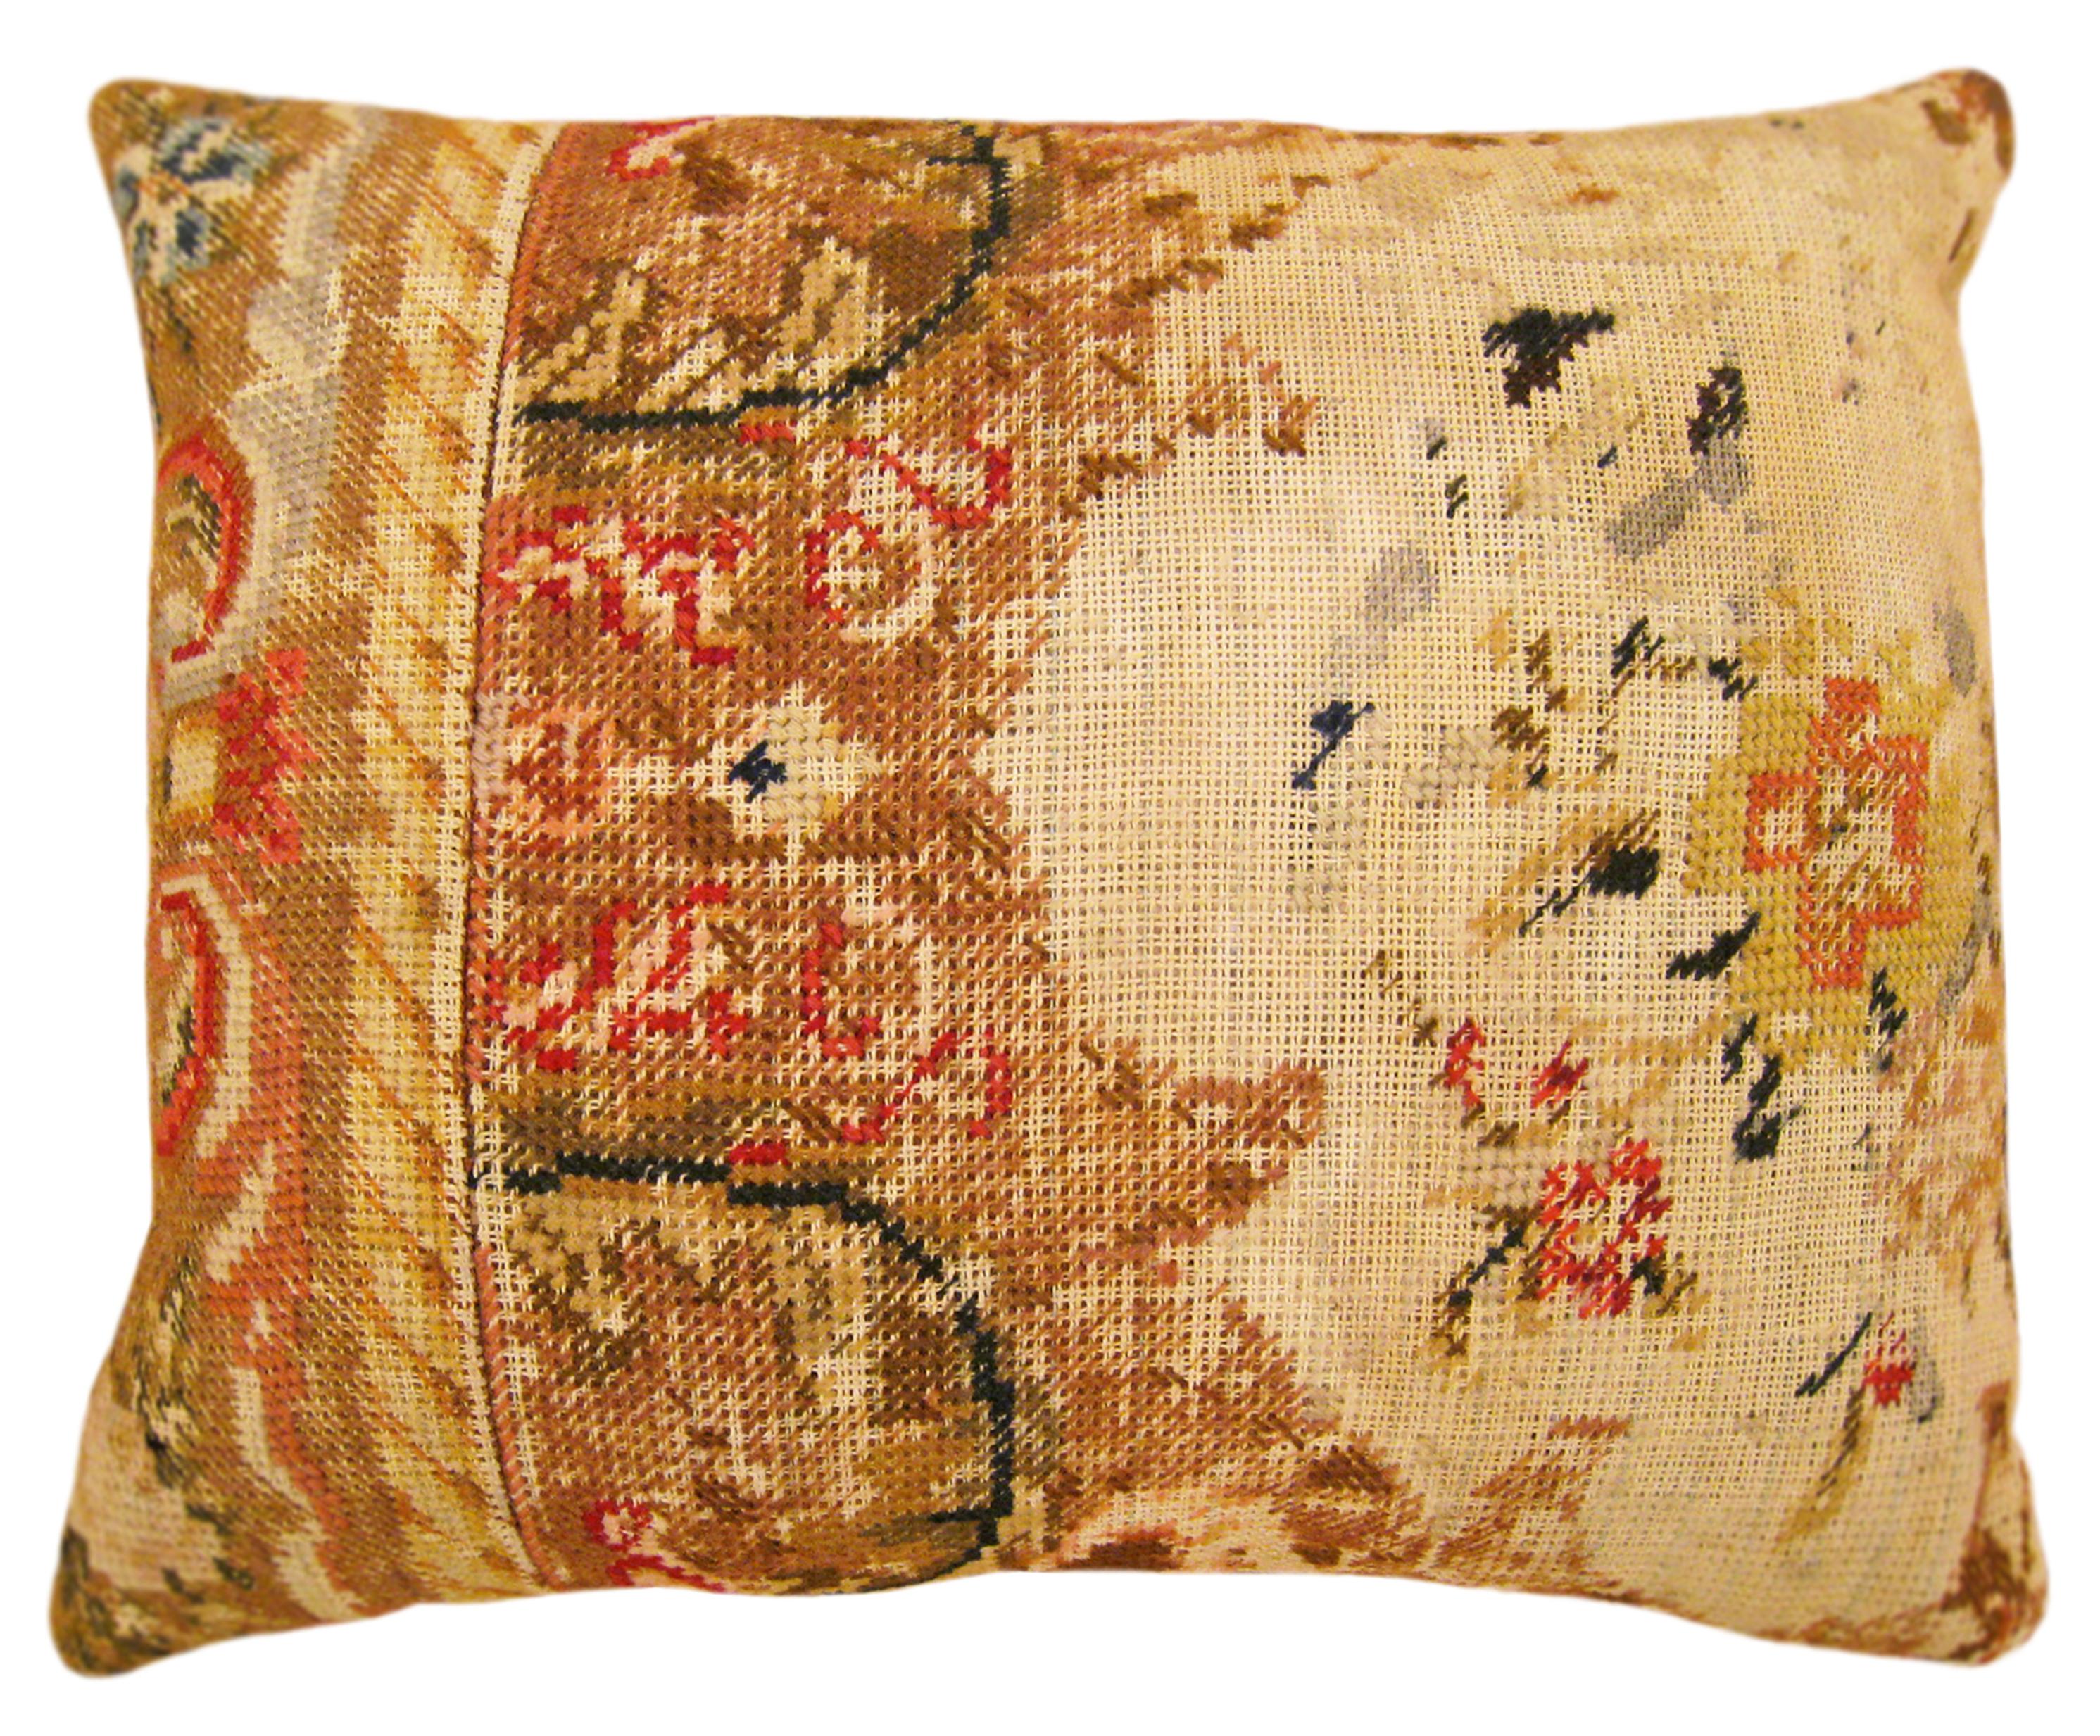 Pair of Vintage Decorative English Needlepoint Pillows, Terracotta Linen Backing 1